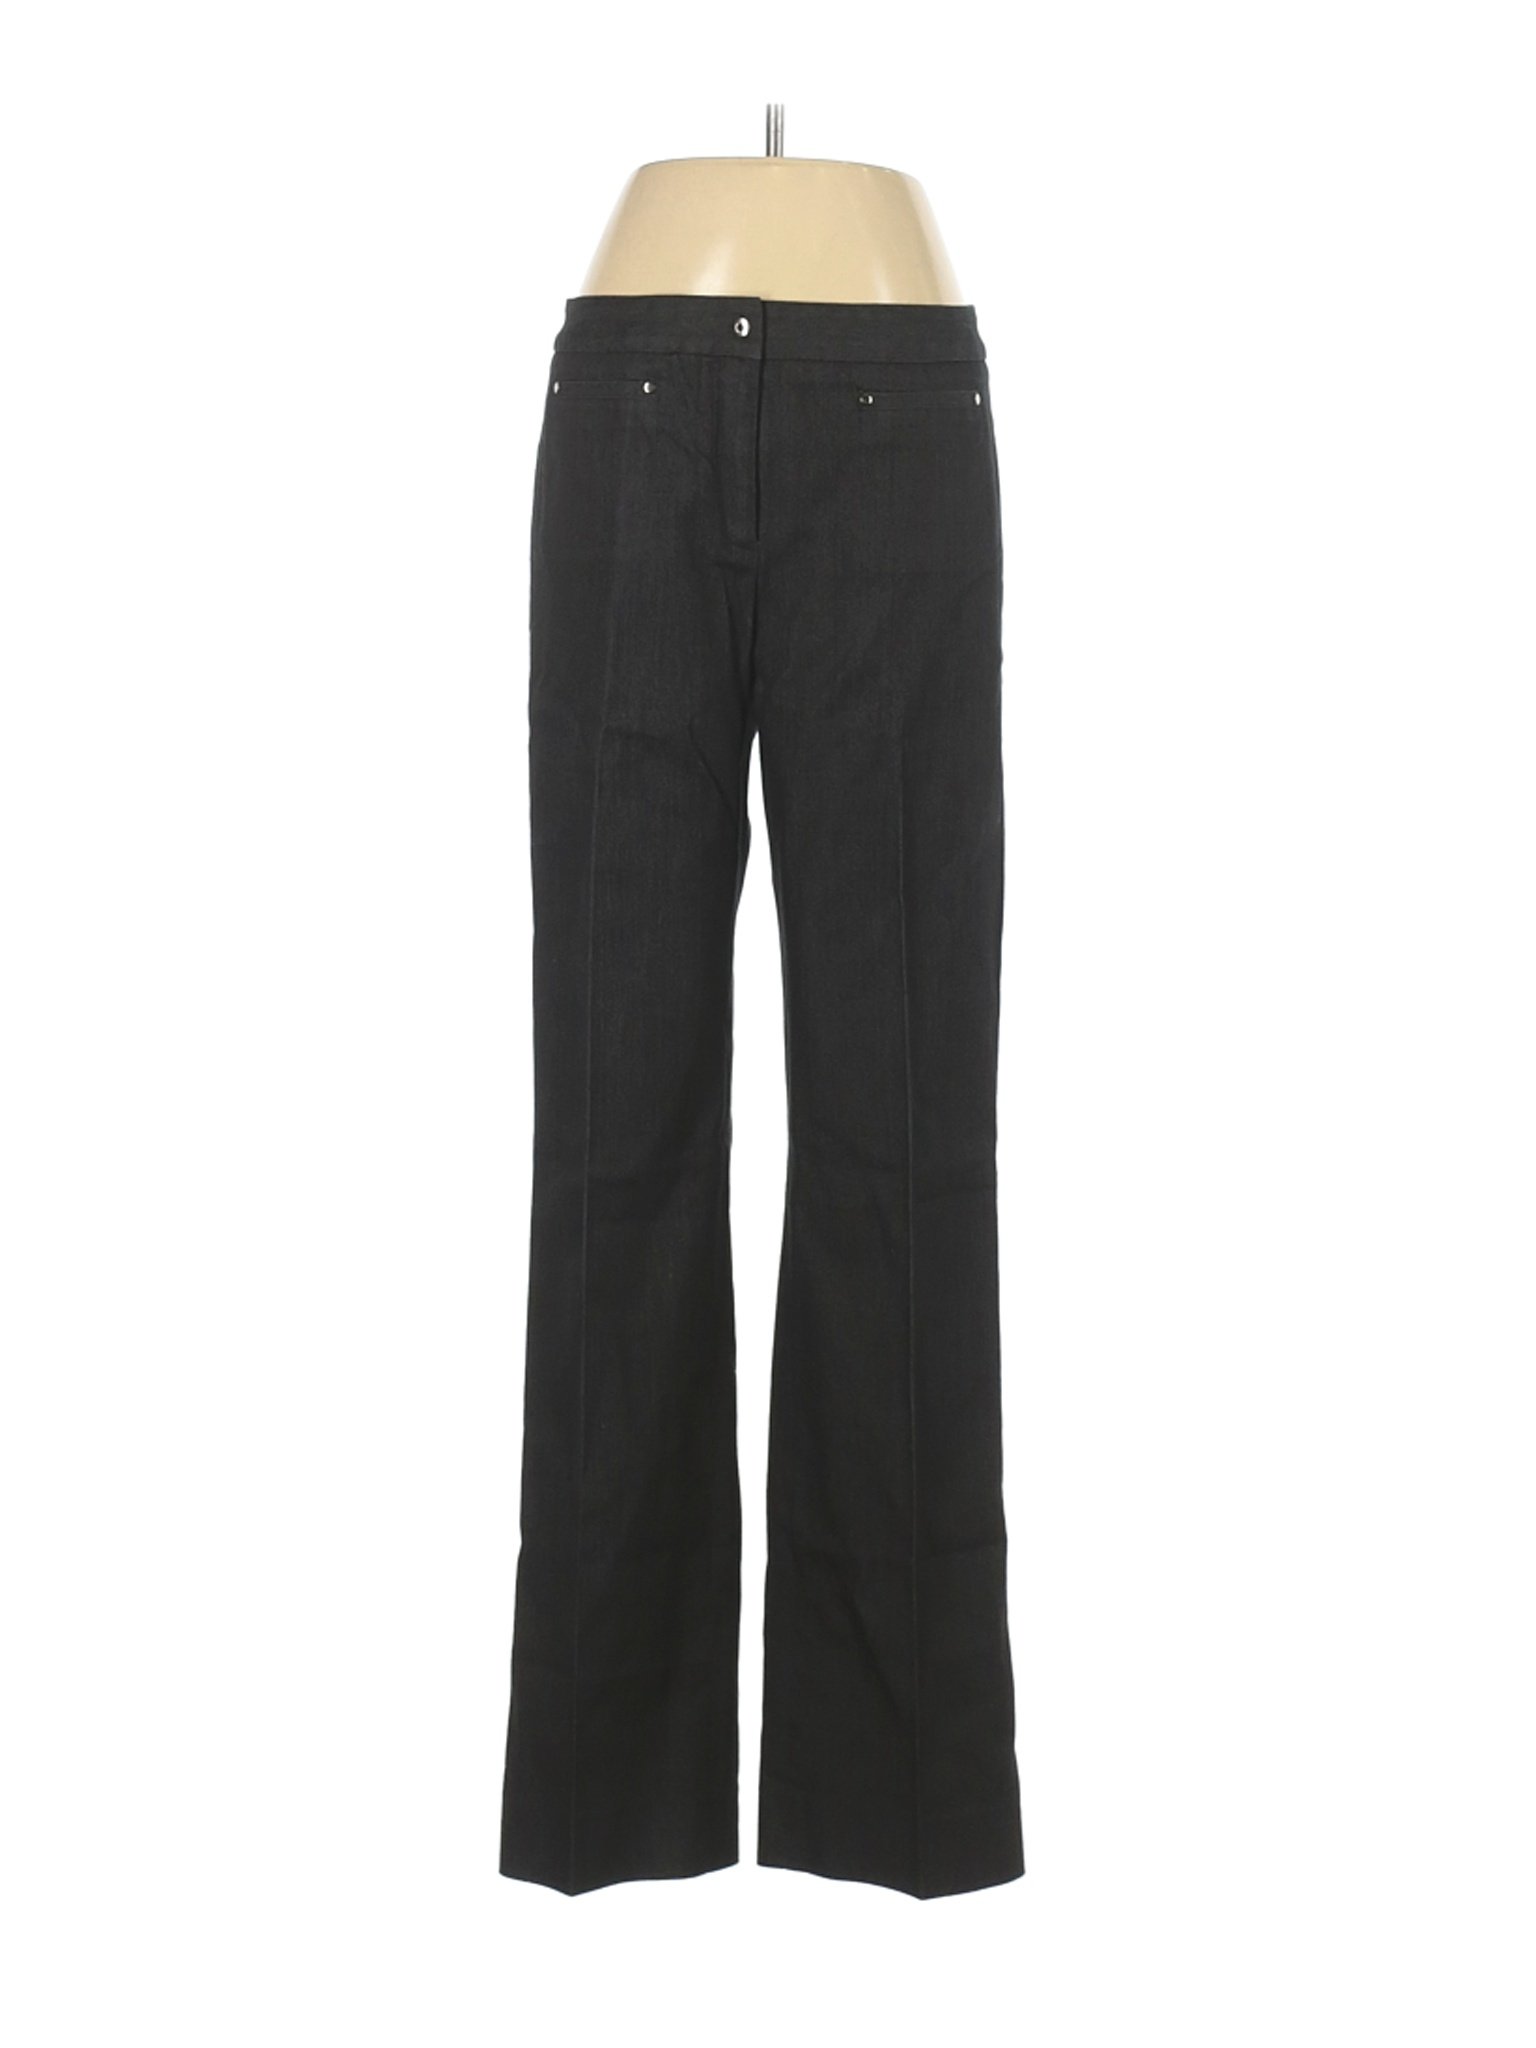 Elliott Lauren Women Black Dress Pants 8 | eBay